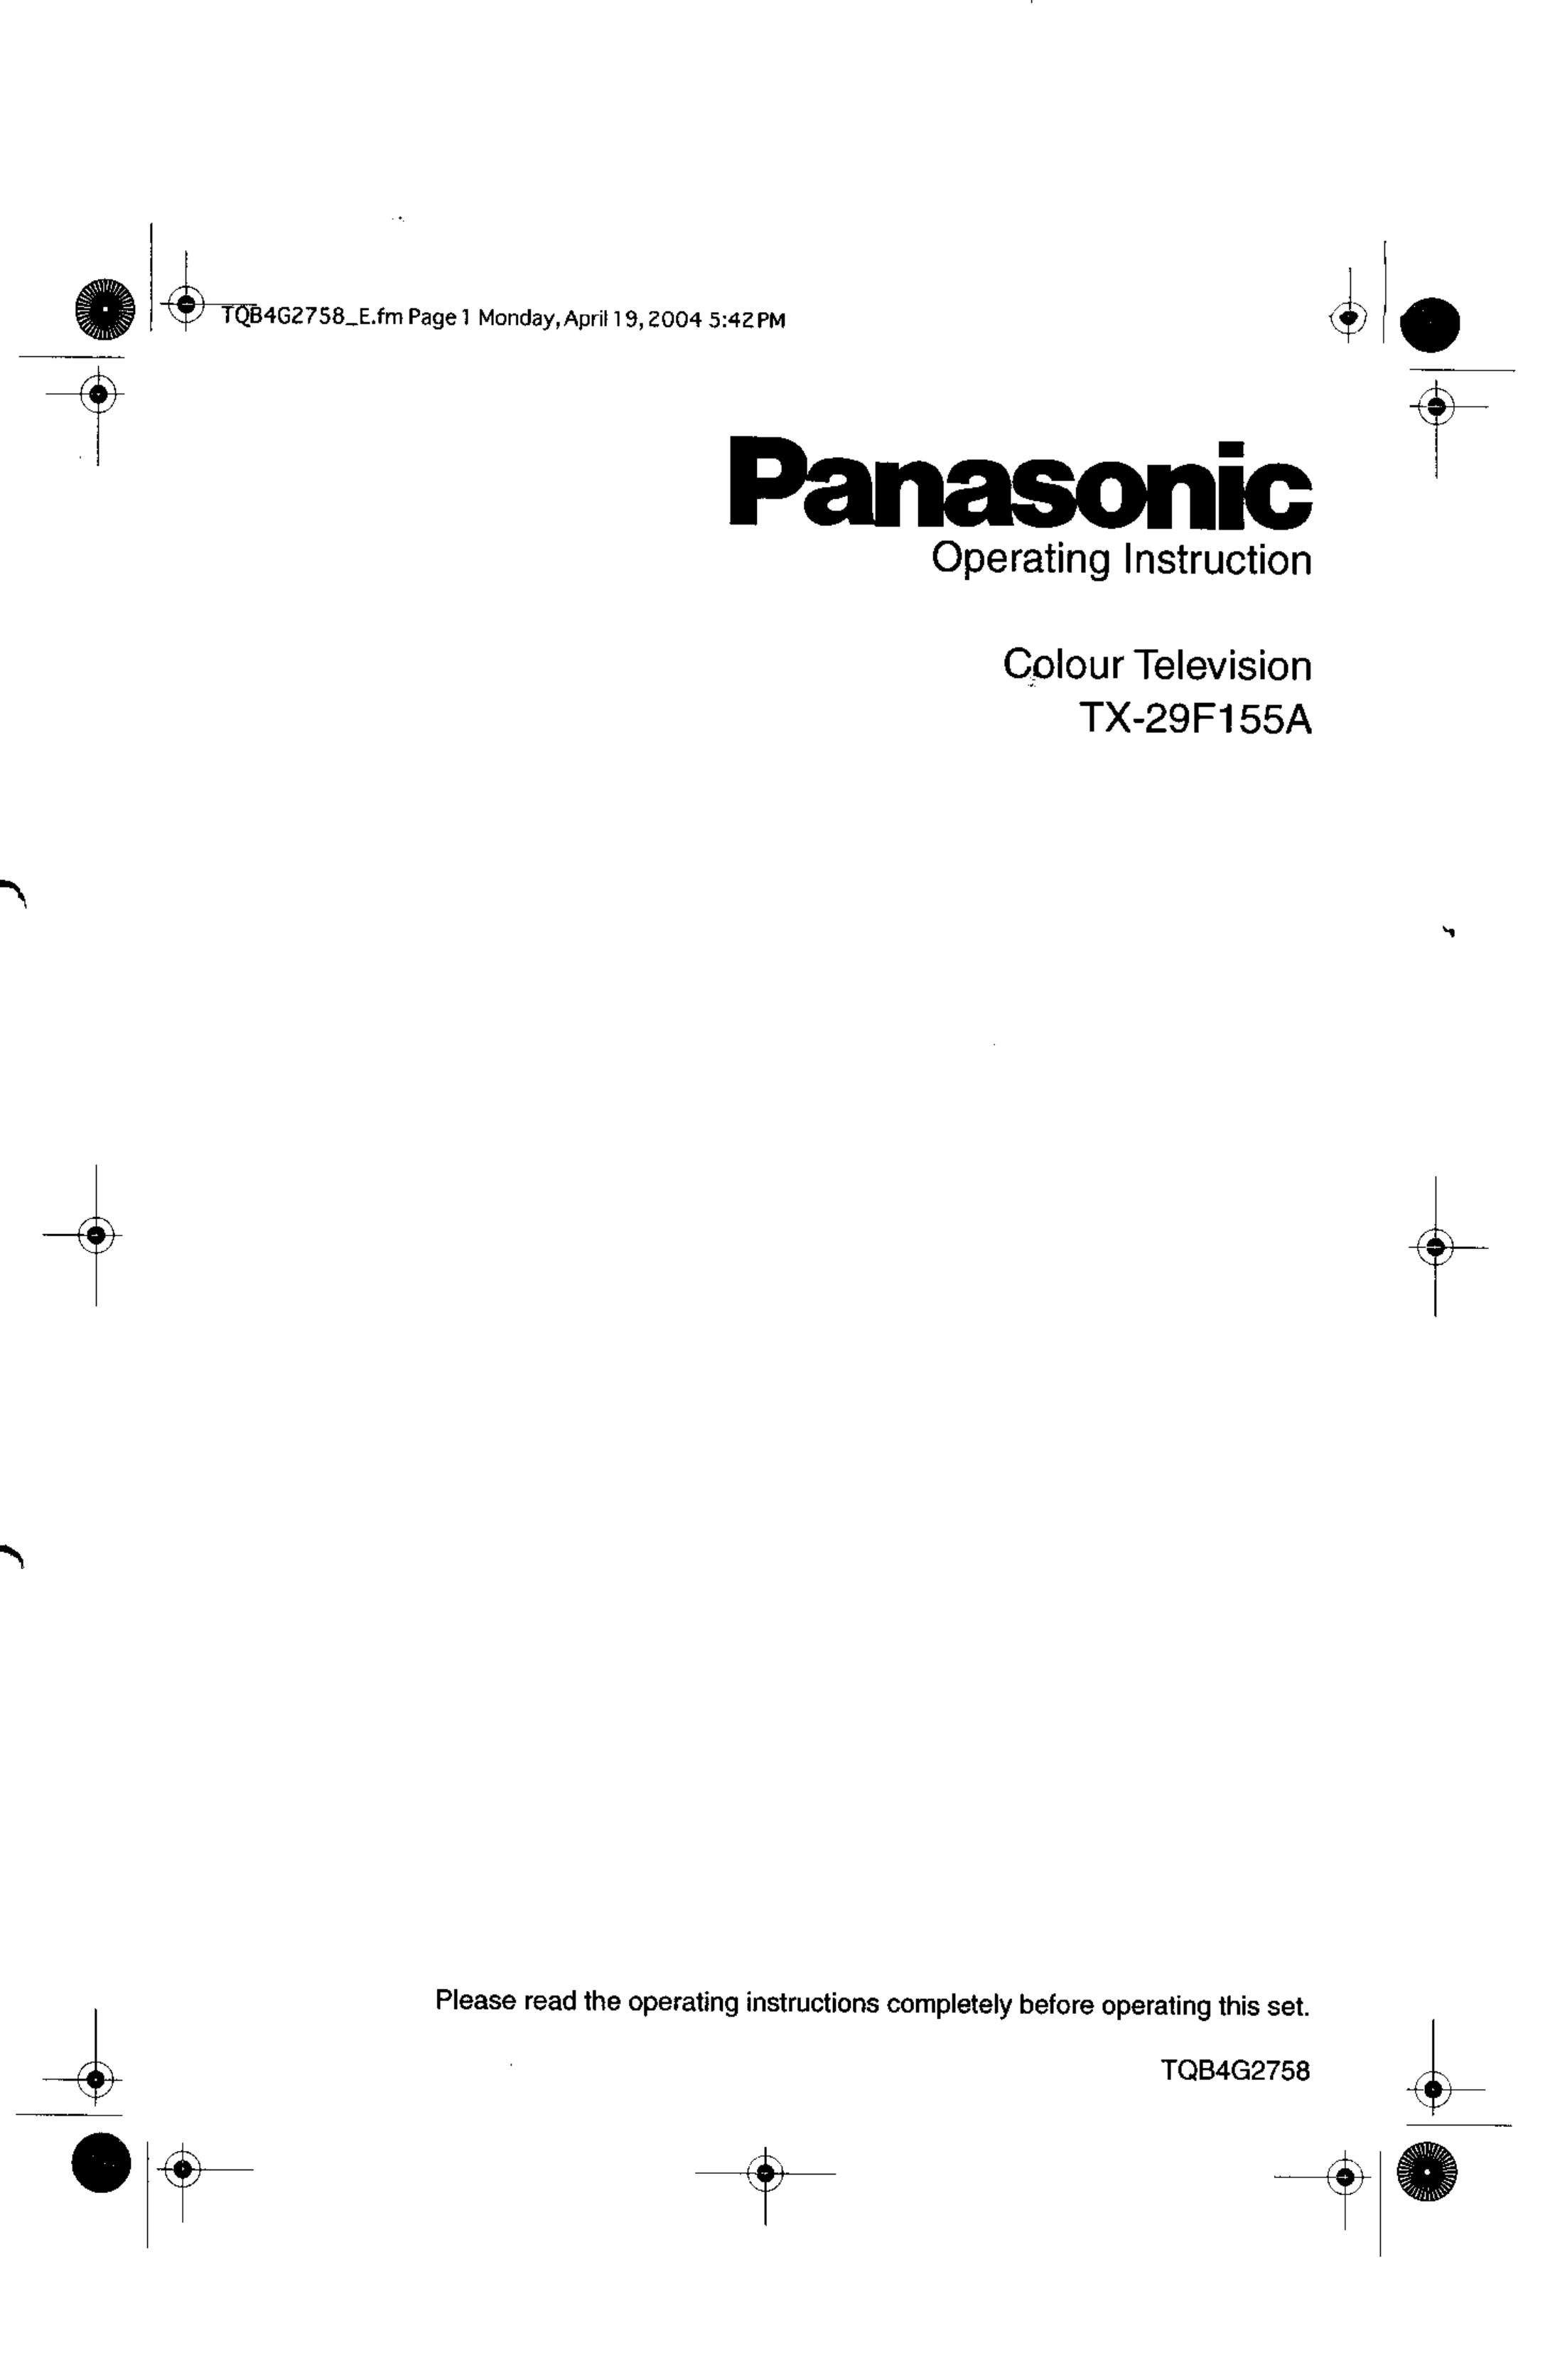 Panasonic TX-29F155A Gas Grill User Manual